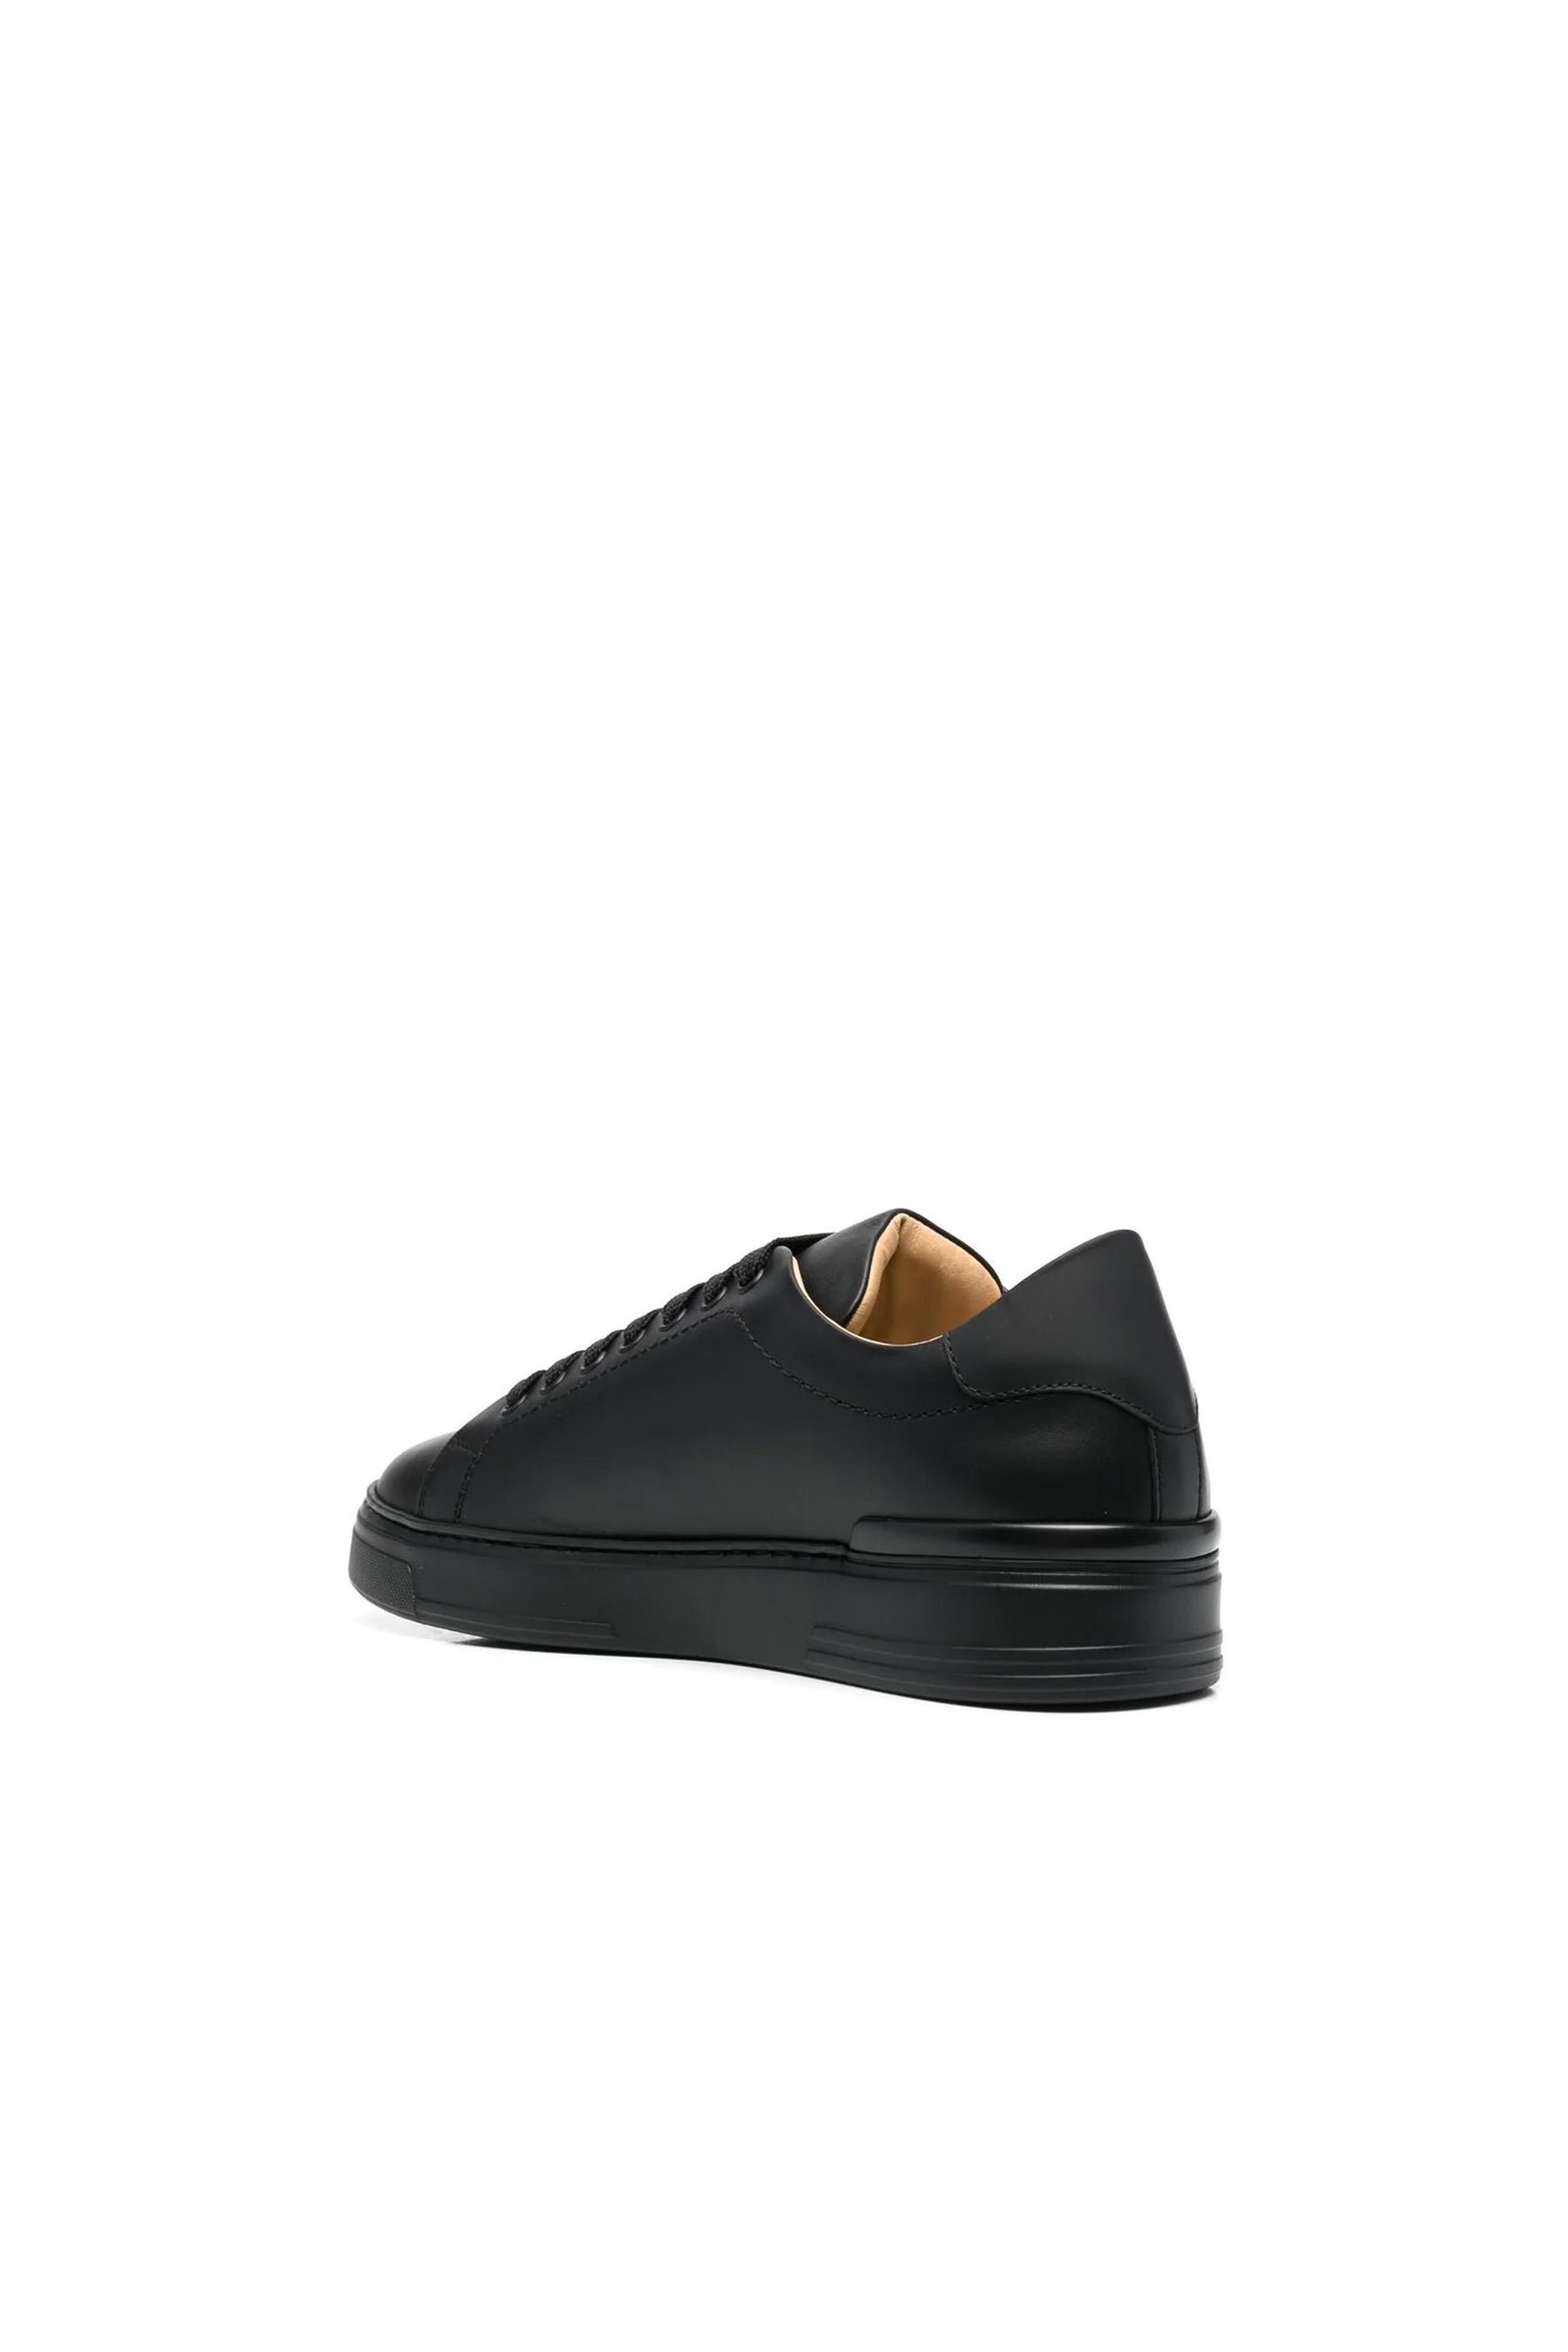 Philipp Plein low-top leather sneakers black